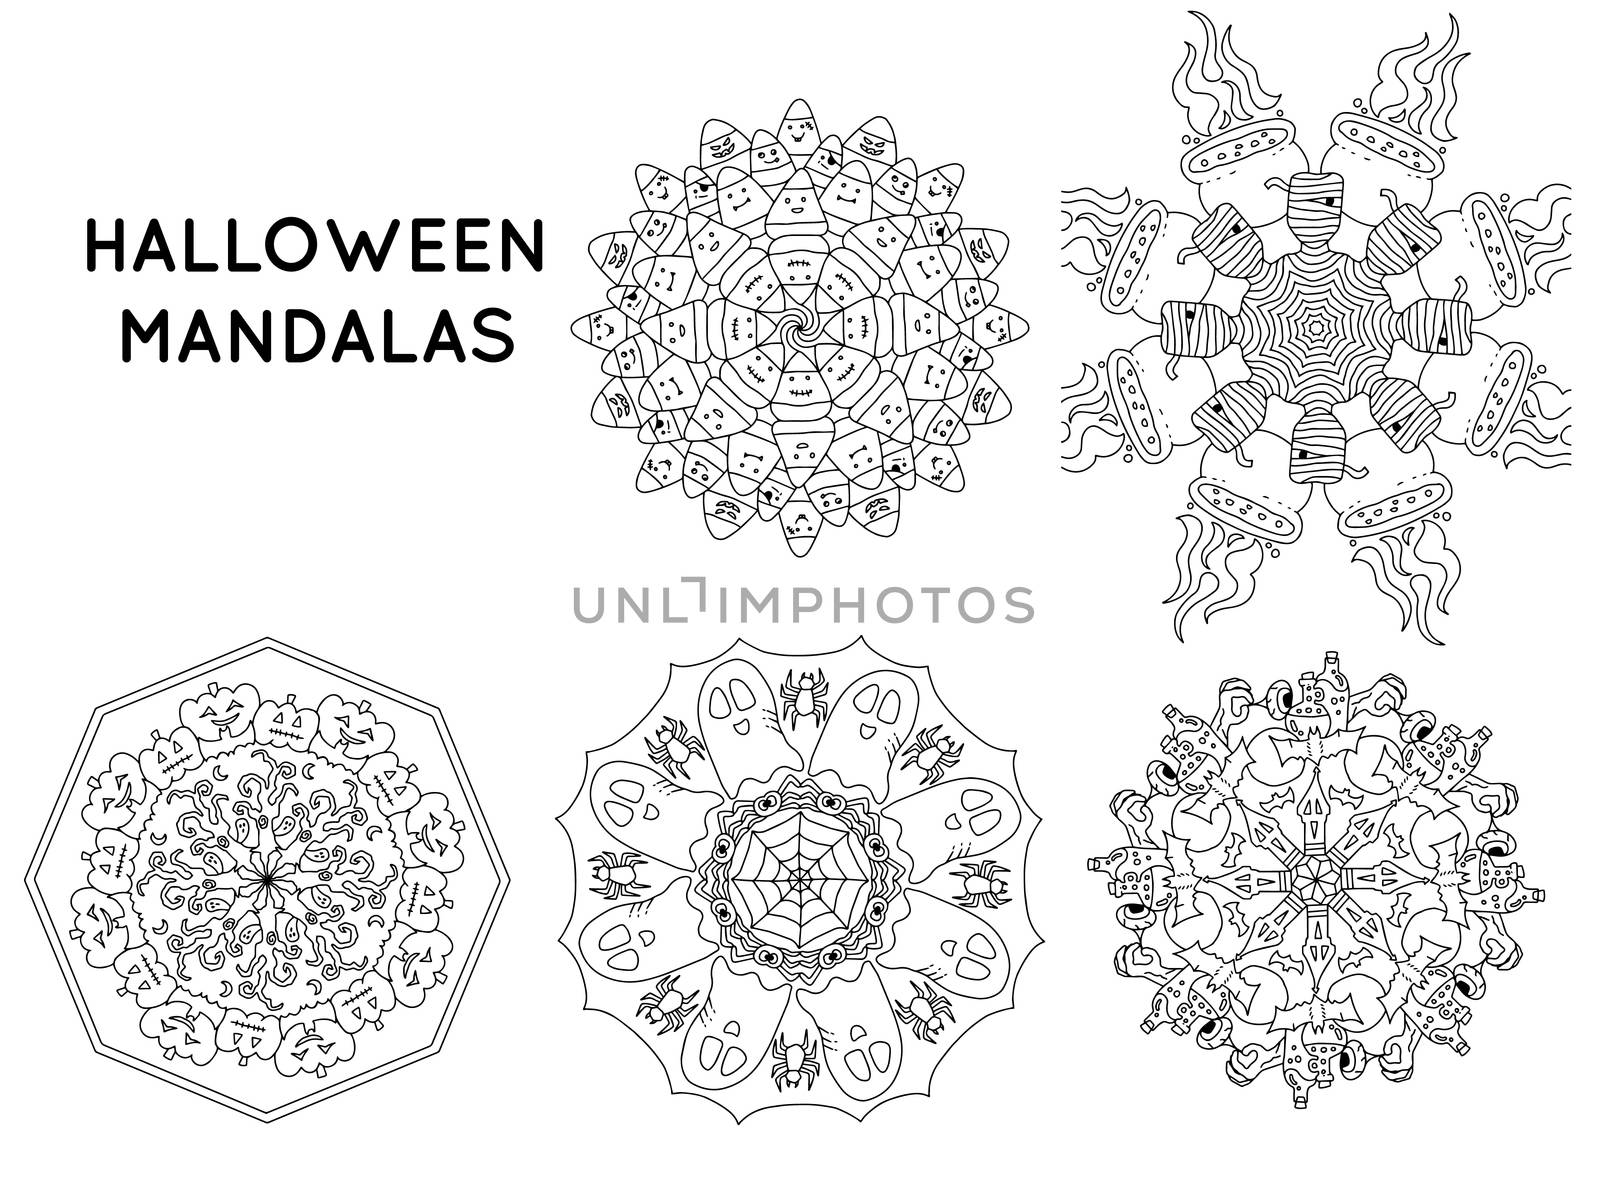 Halloween theme mandala by nongpimmy